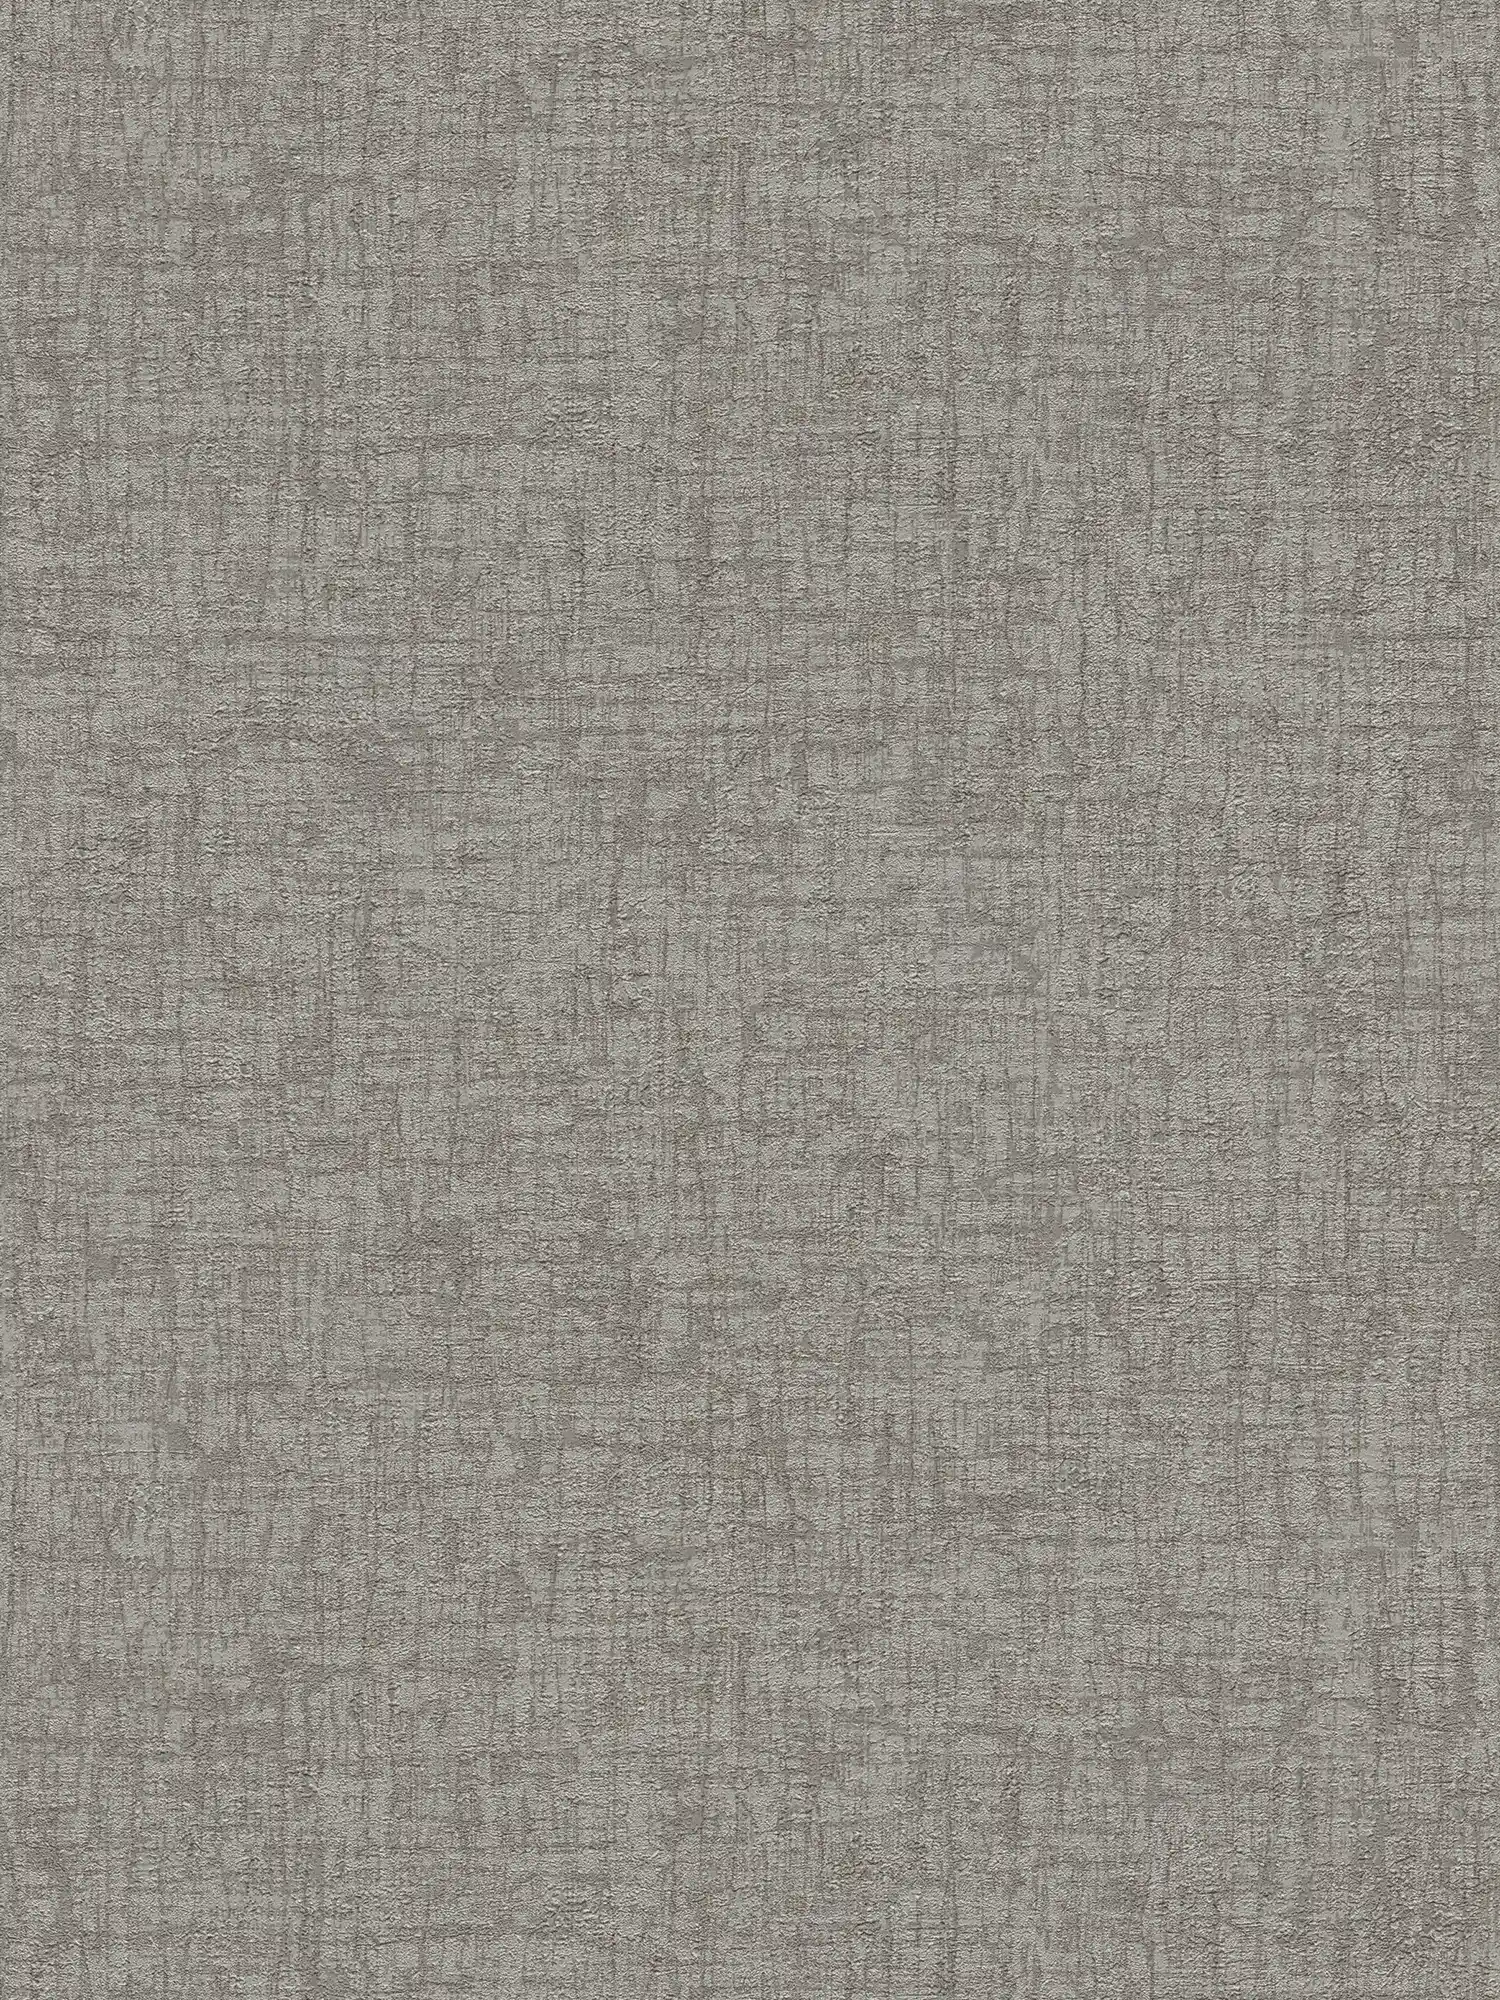 Non-woven wallpaper with texture in textile look - grey, dark grey
